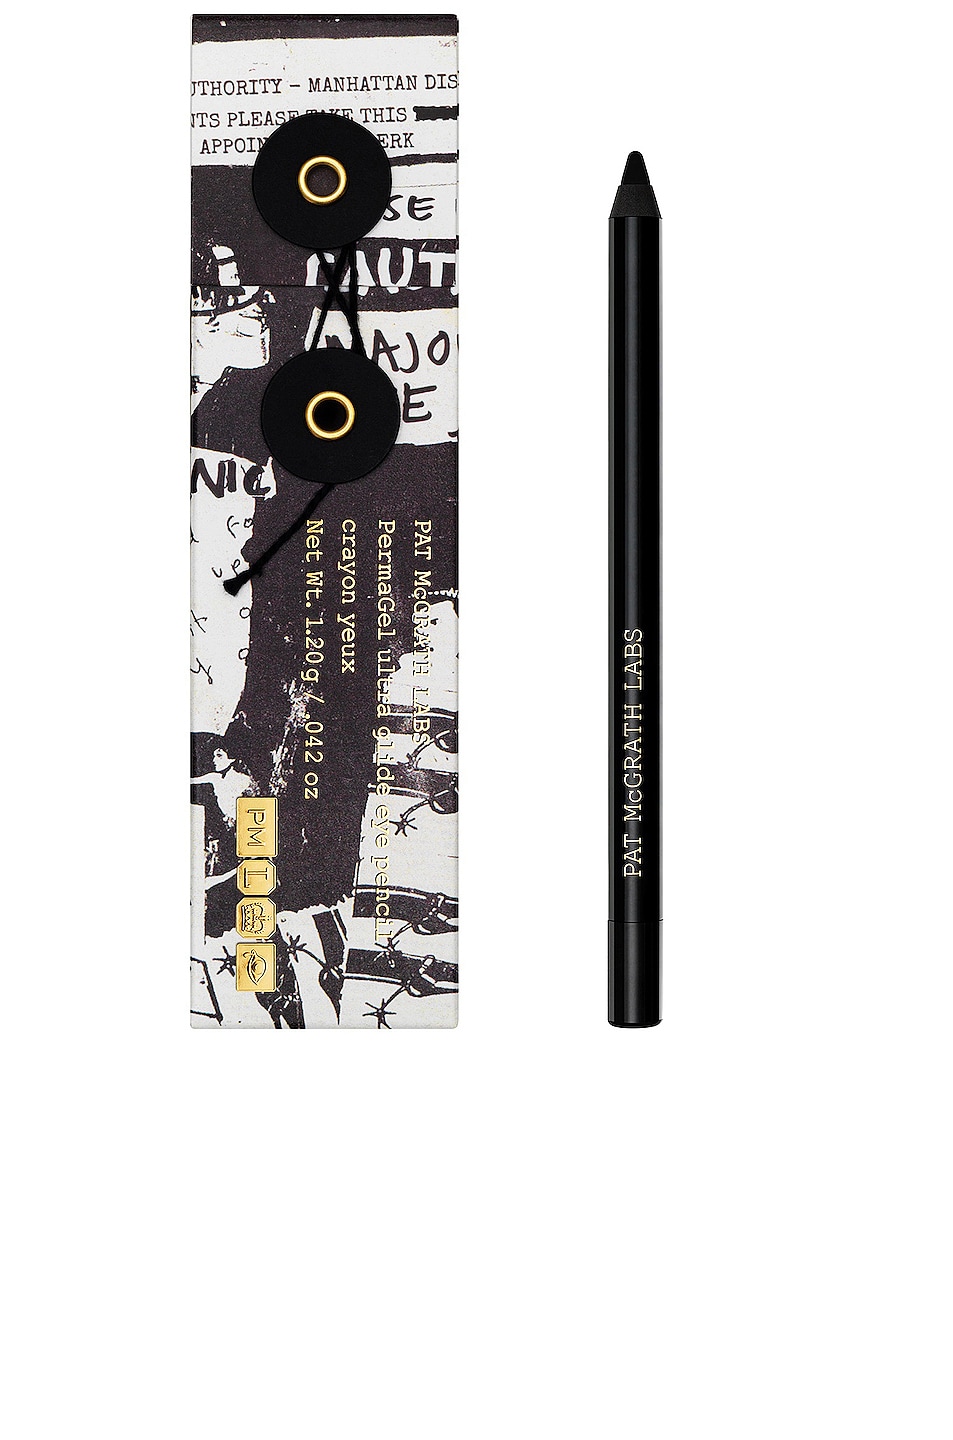 PermaGel Ultra Glide Eye Pencil in Black